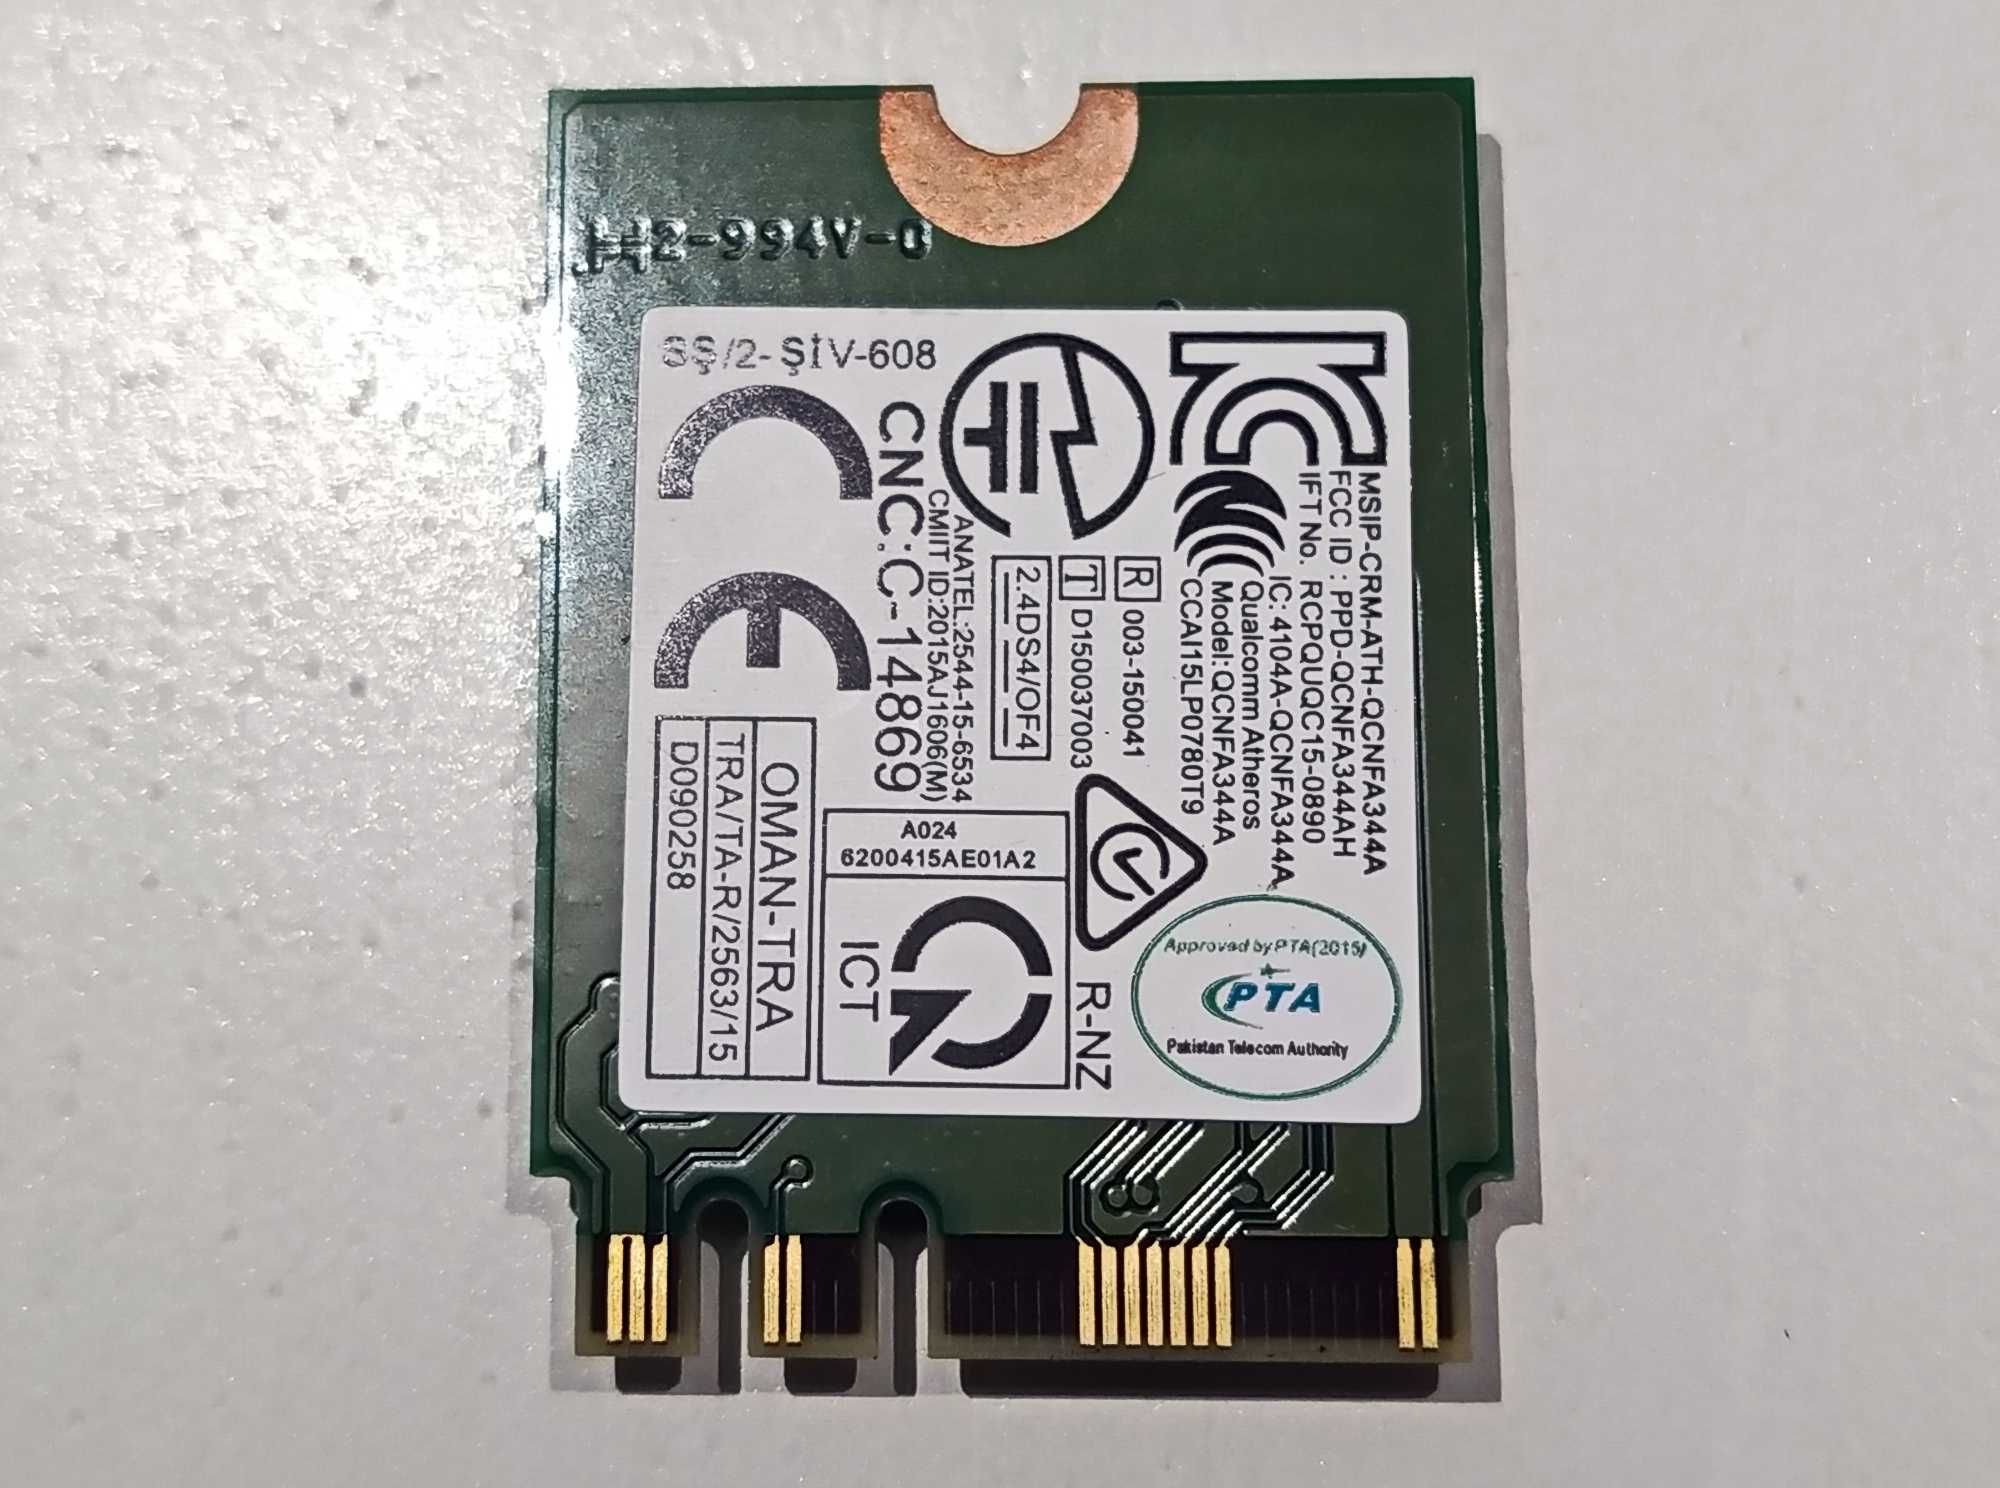 J. NOWE Karta sieciowa Killer Wireless-N/A/AC 1435 Network Adapter M.2